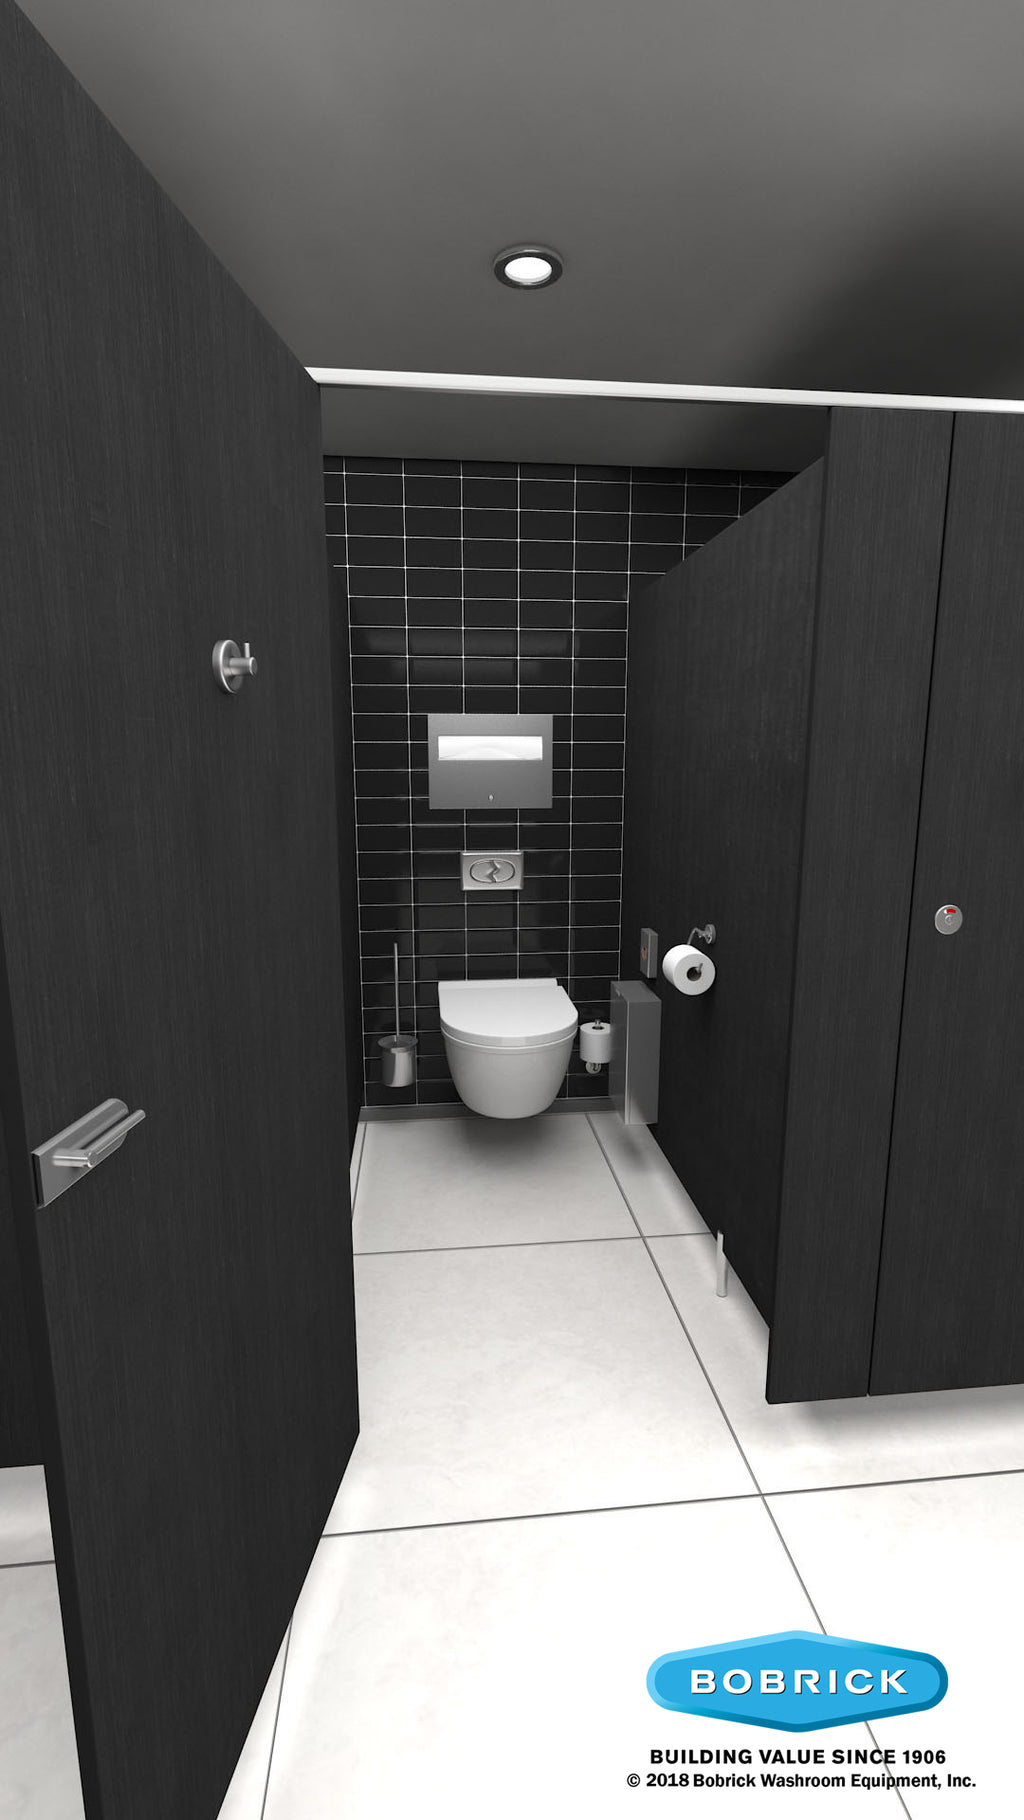 Matte Black Toilet Tissue Holder (Single) - Surface Mounted - 7305-41 